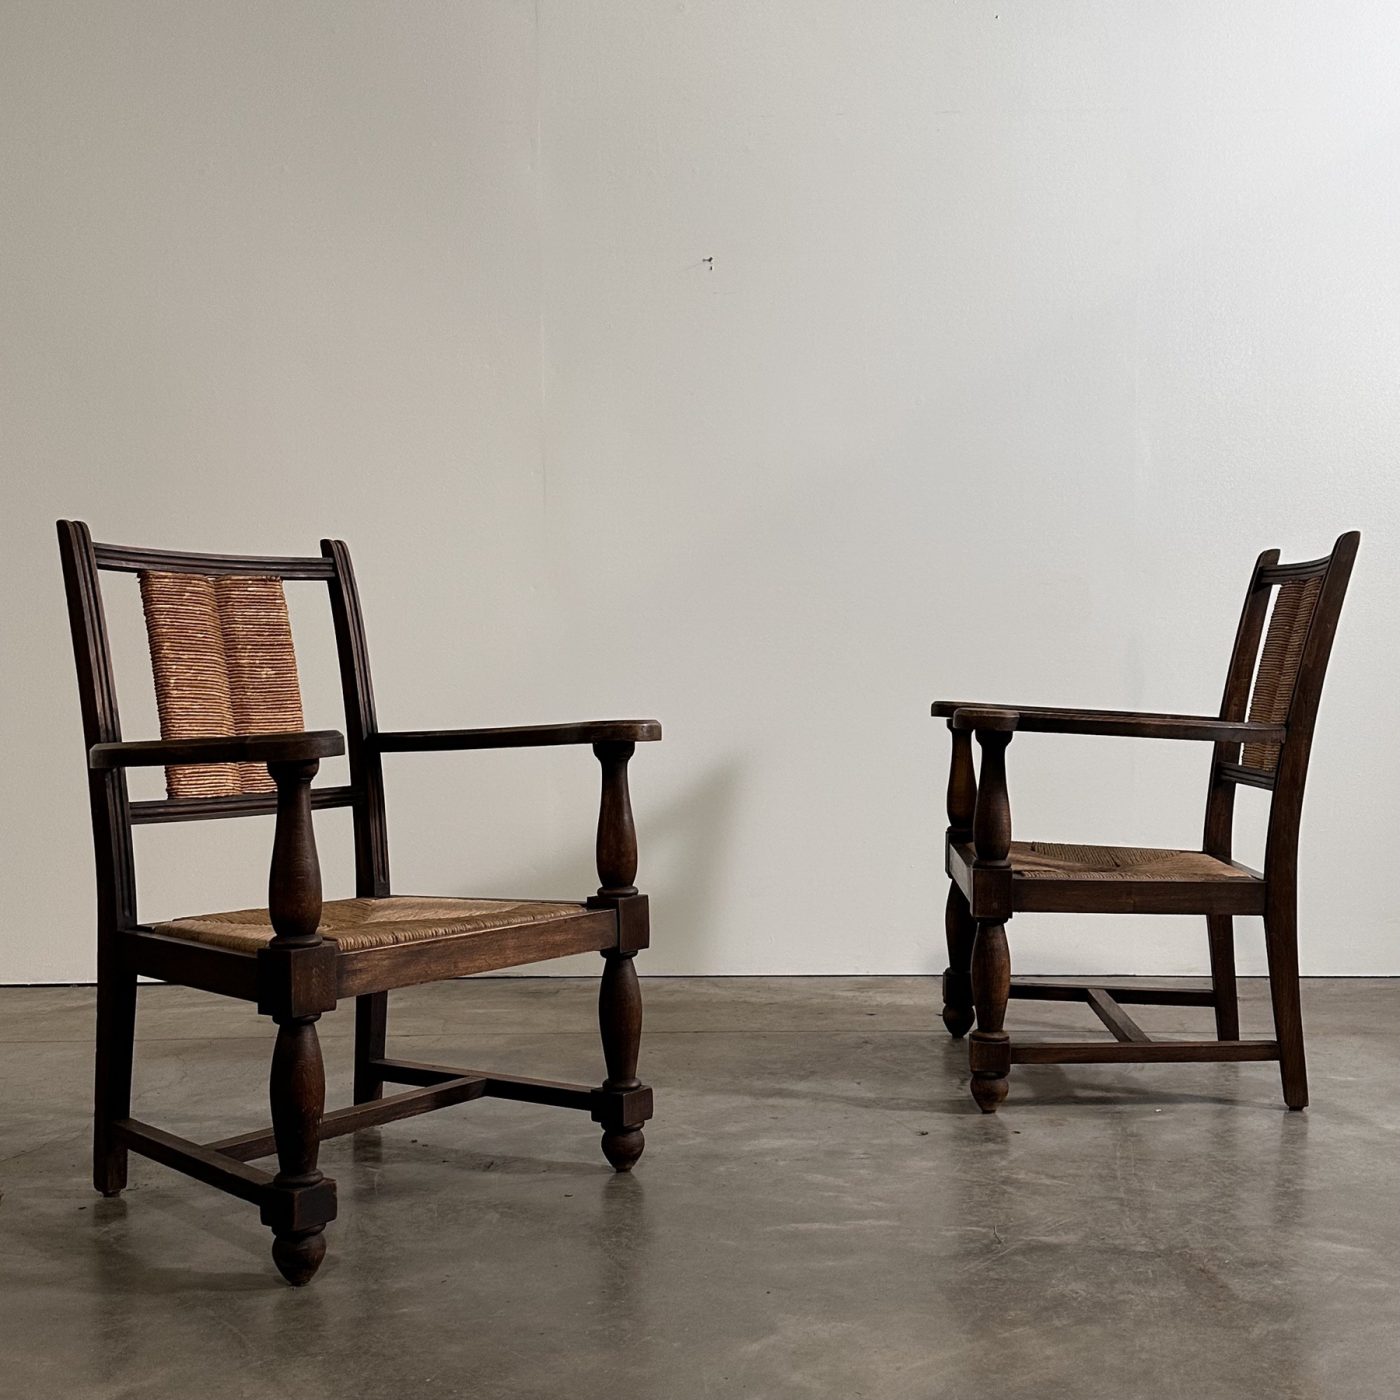 objet-vagabond-armchairs0005